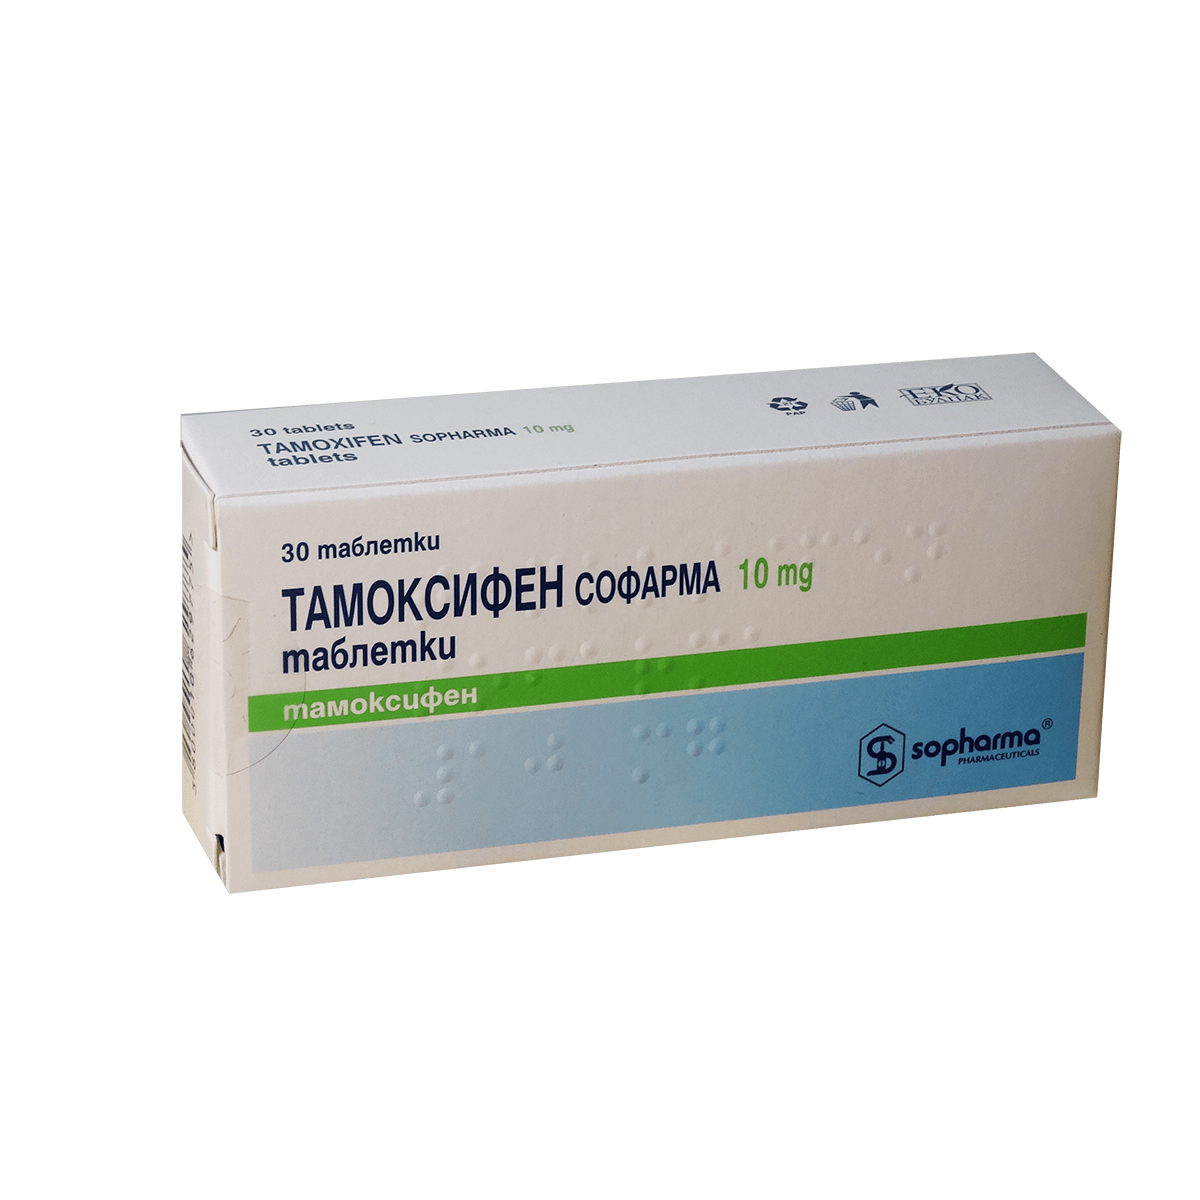 Tamoxifen-tablets-10mg-antiestrogen